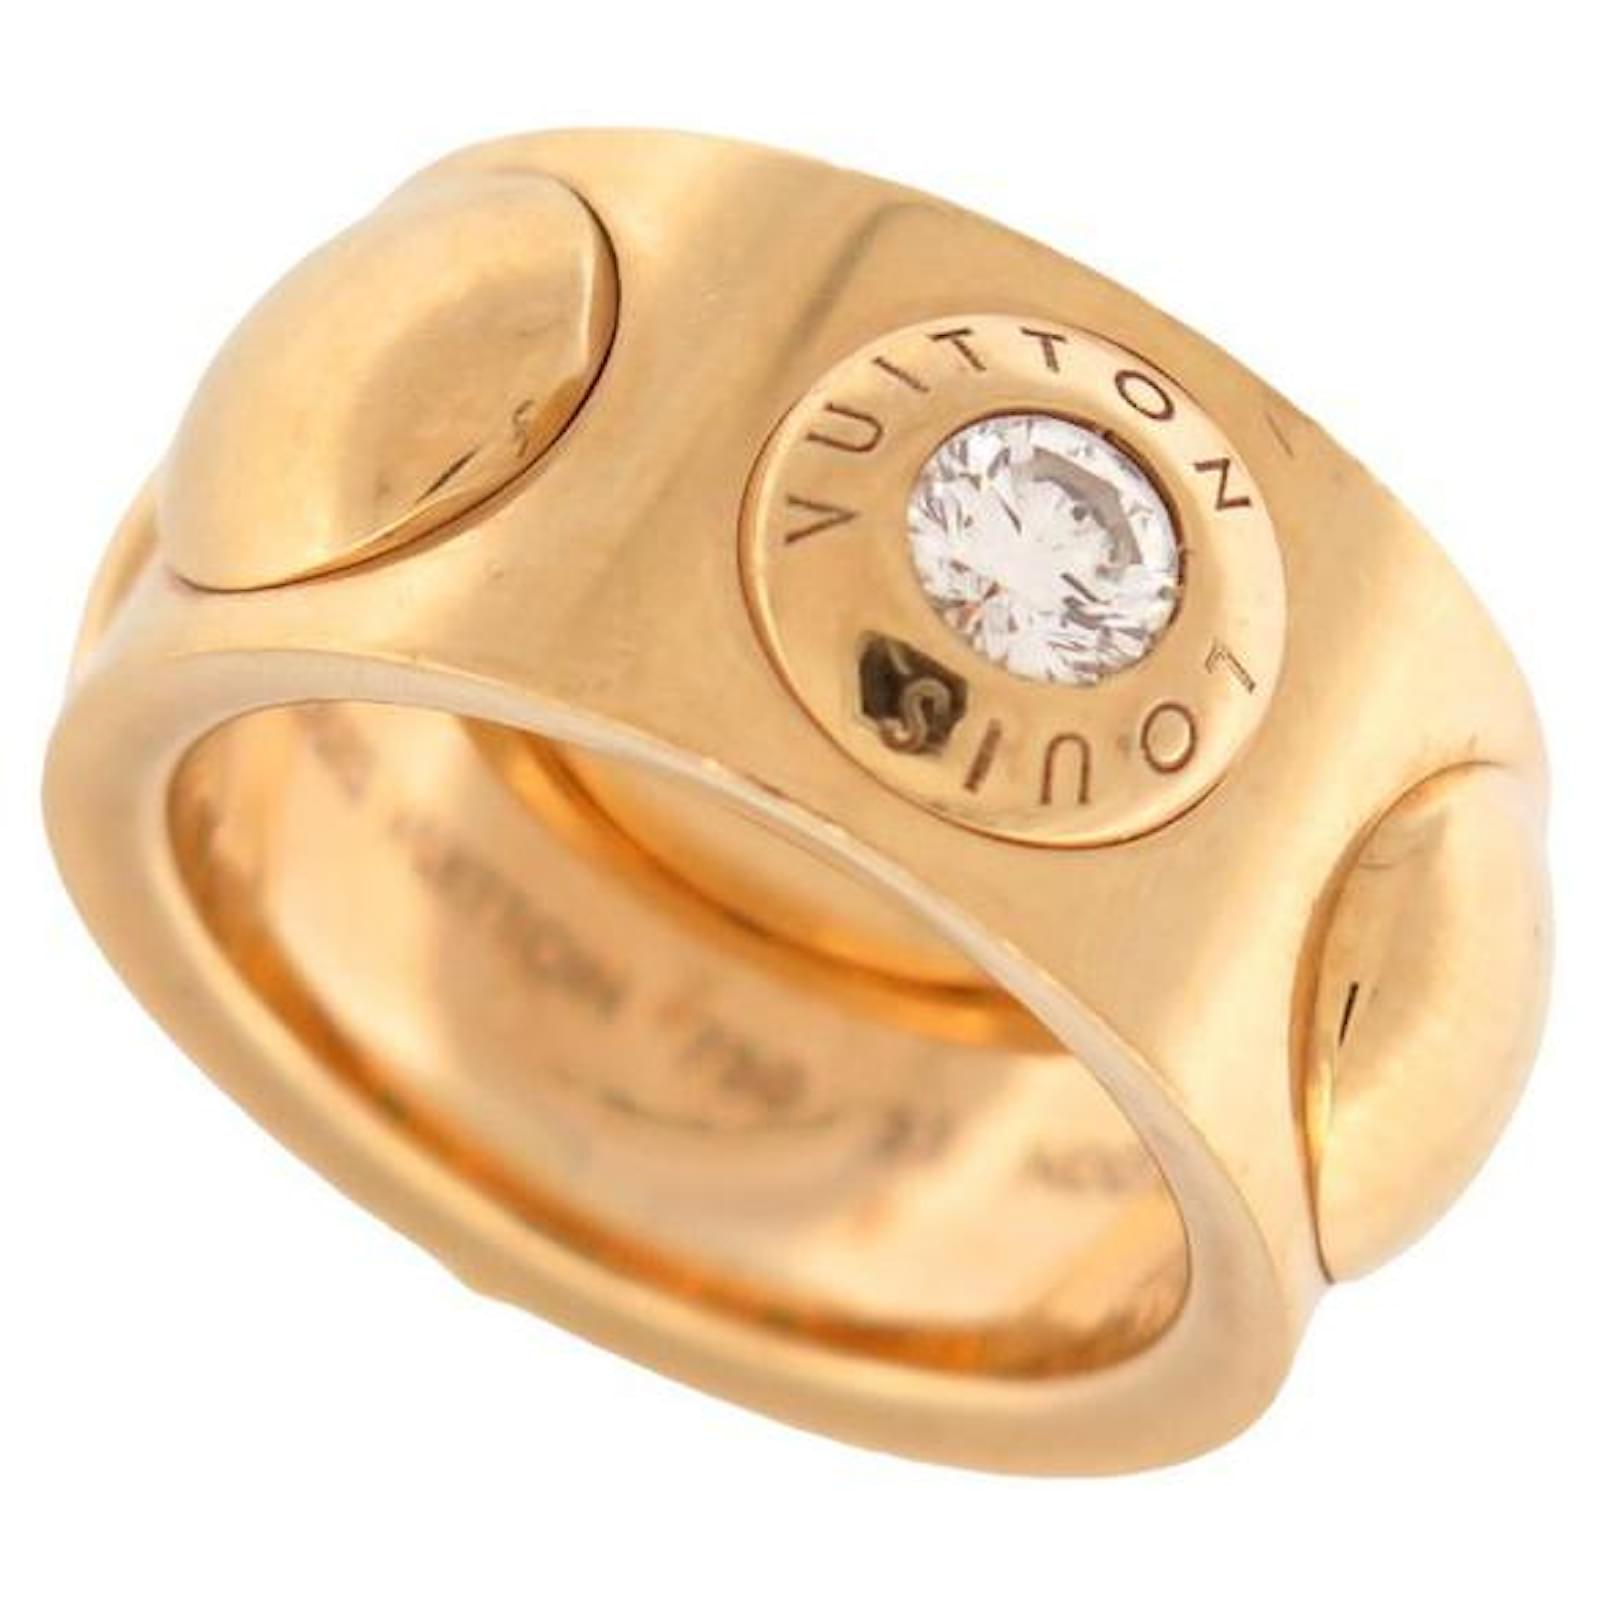 Louis Vuitton Empreinte Ring, Yellow Gold and Diamonds Gold. Size 51